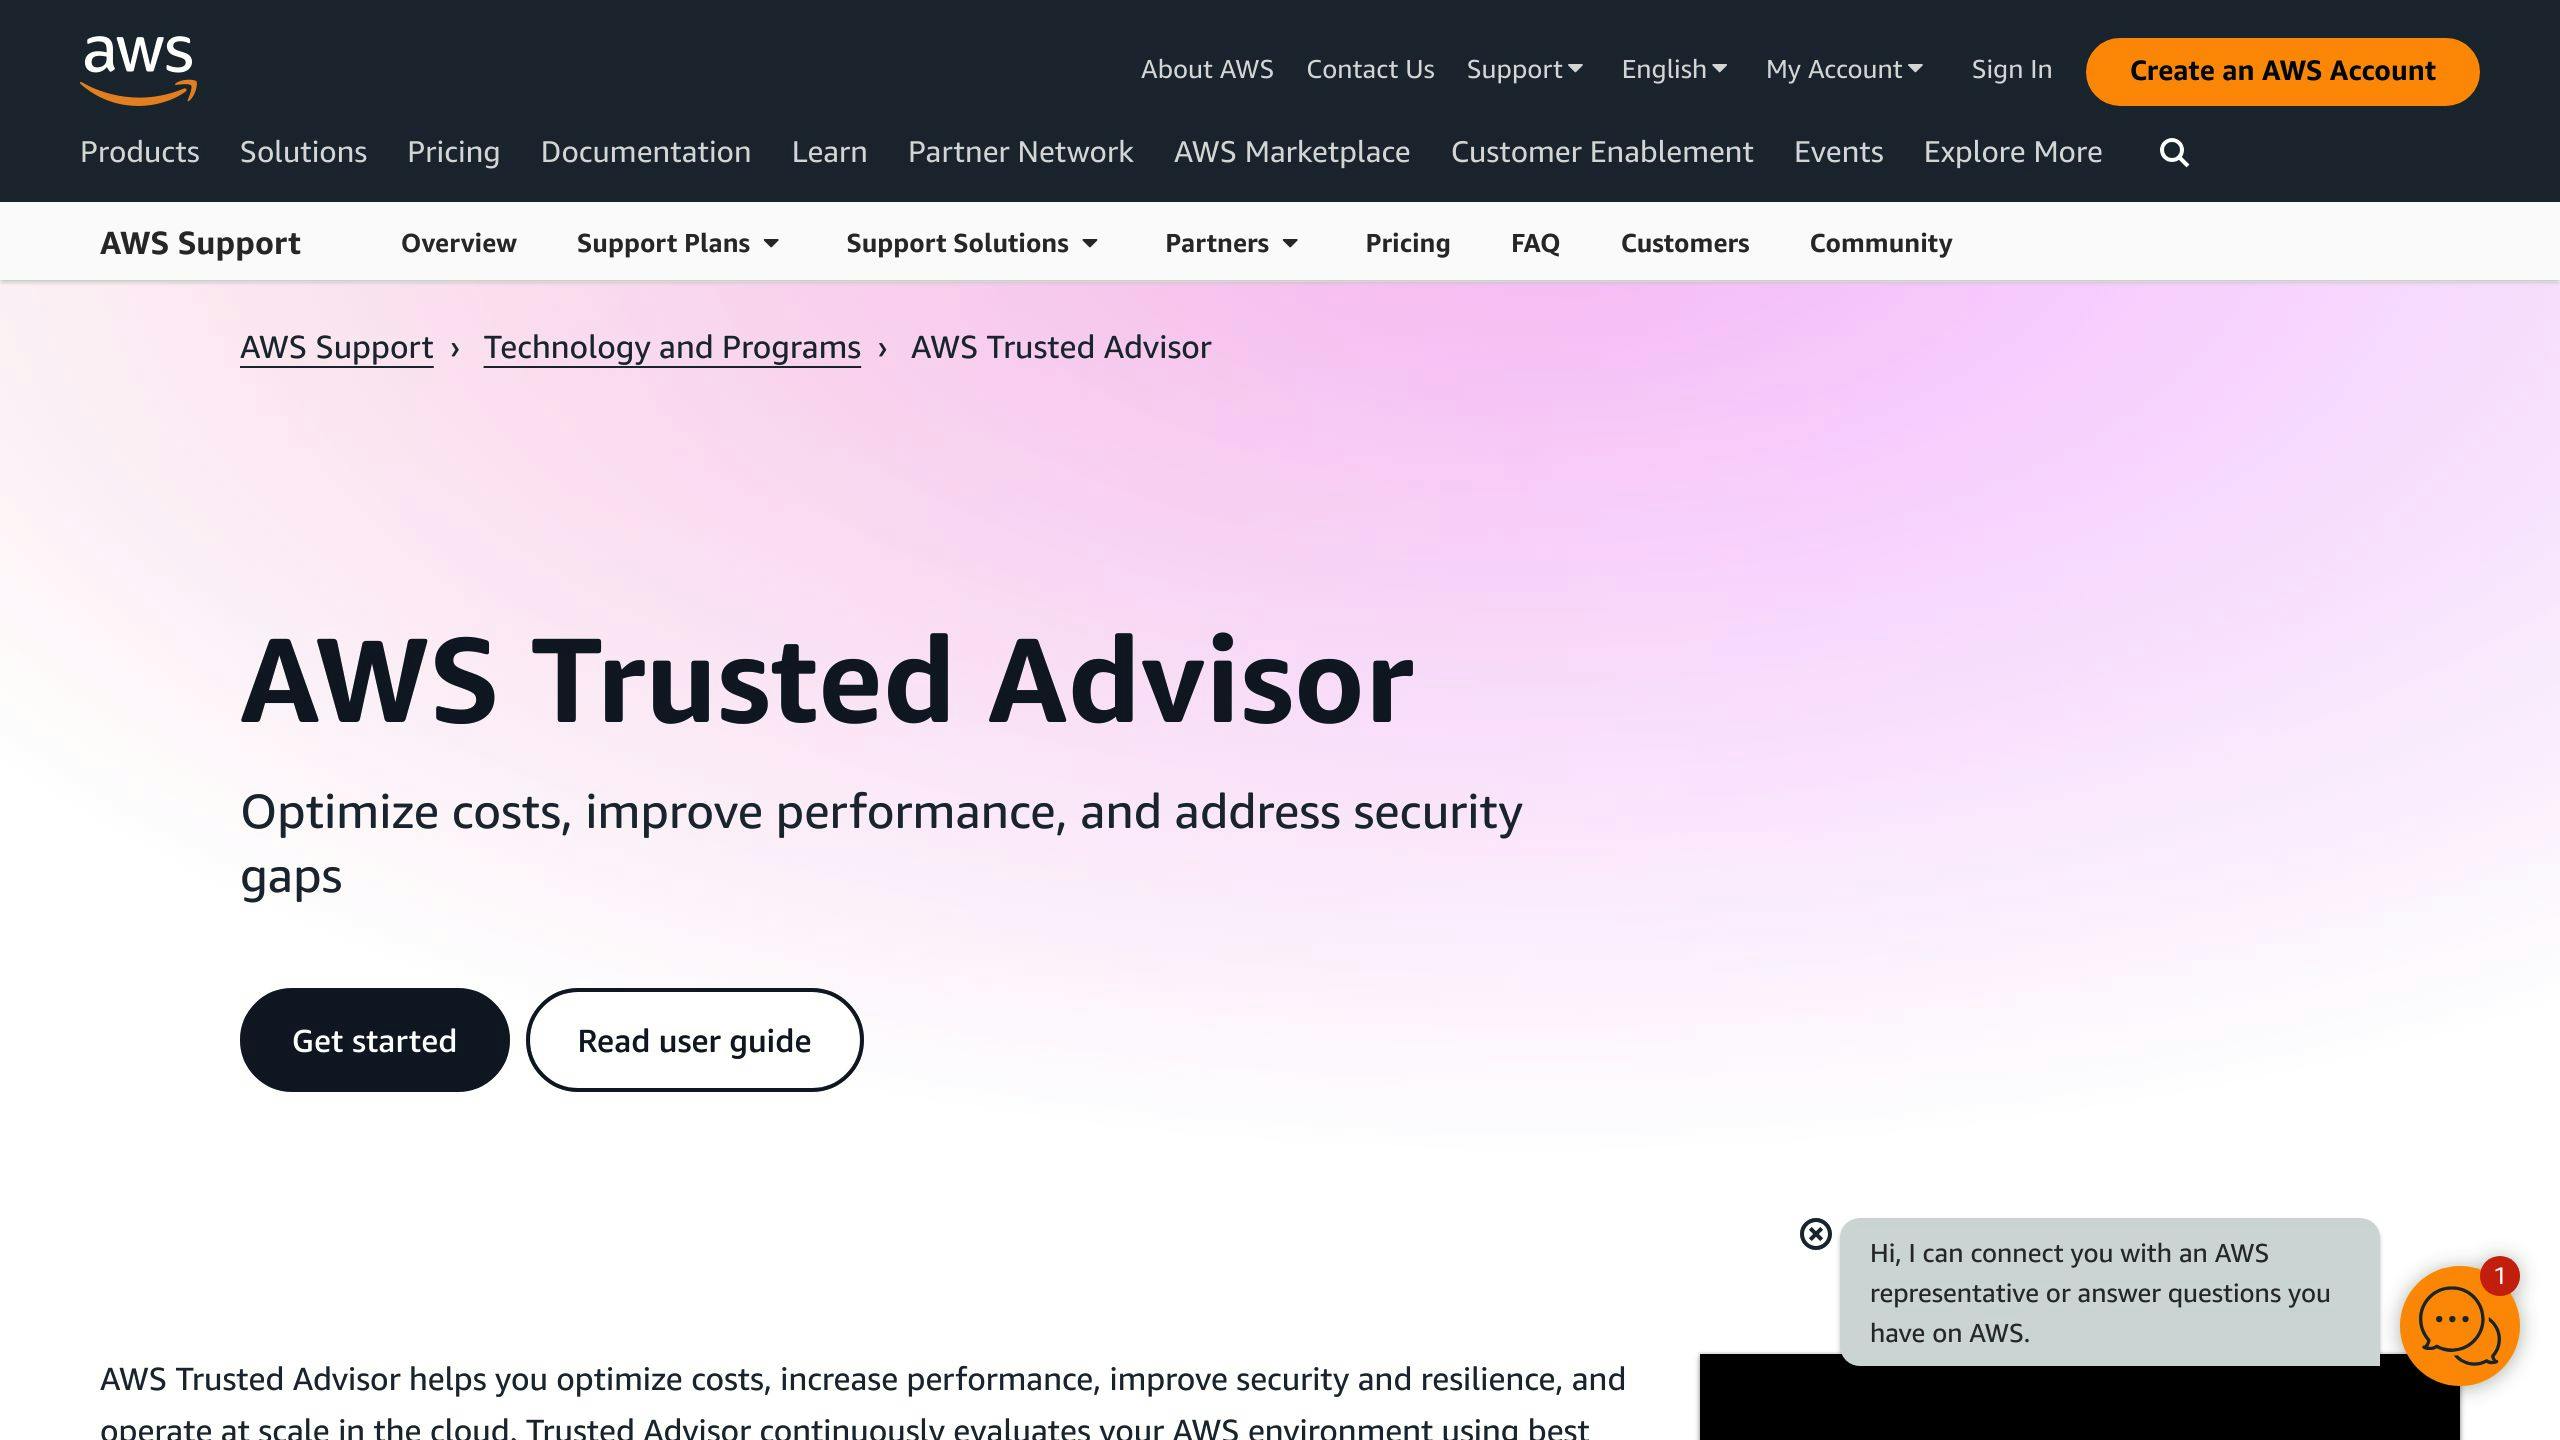 AWS Trusted Advisor